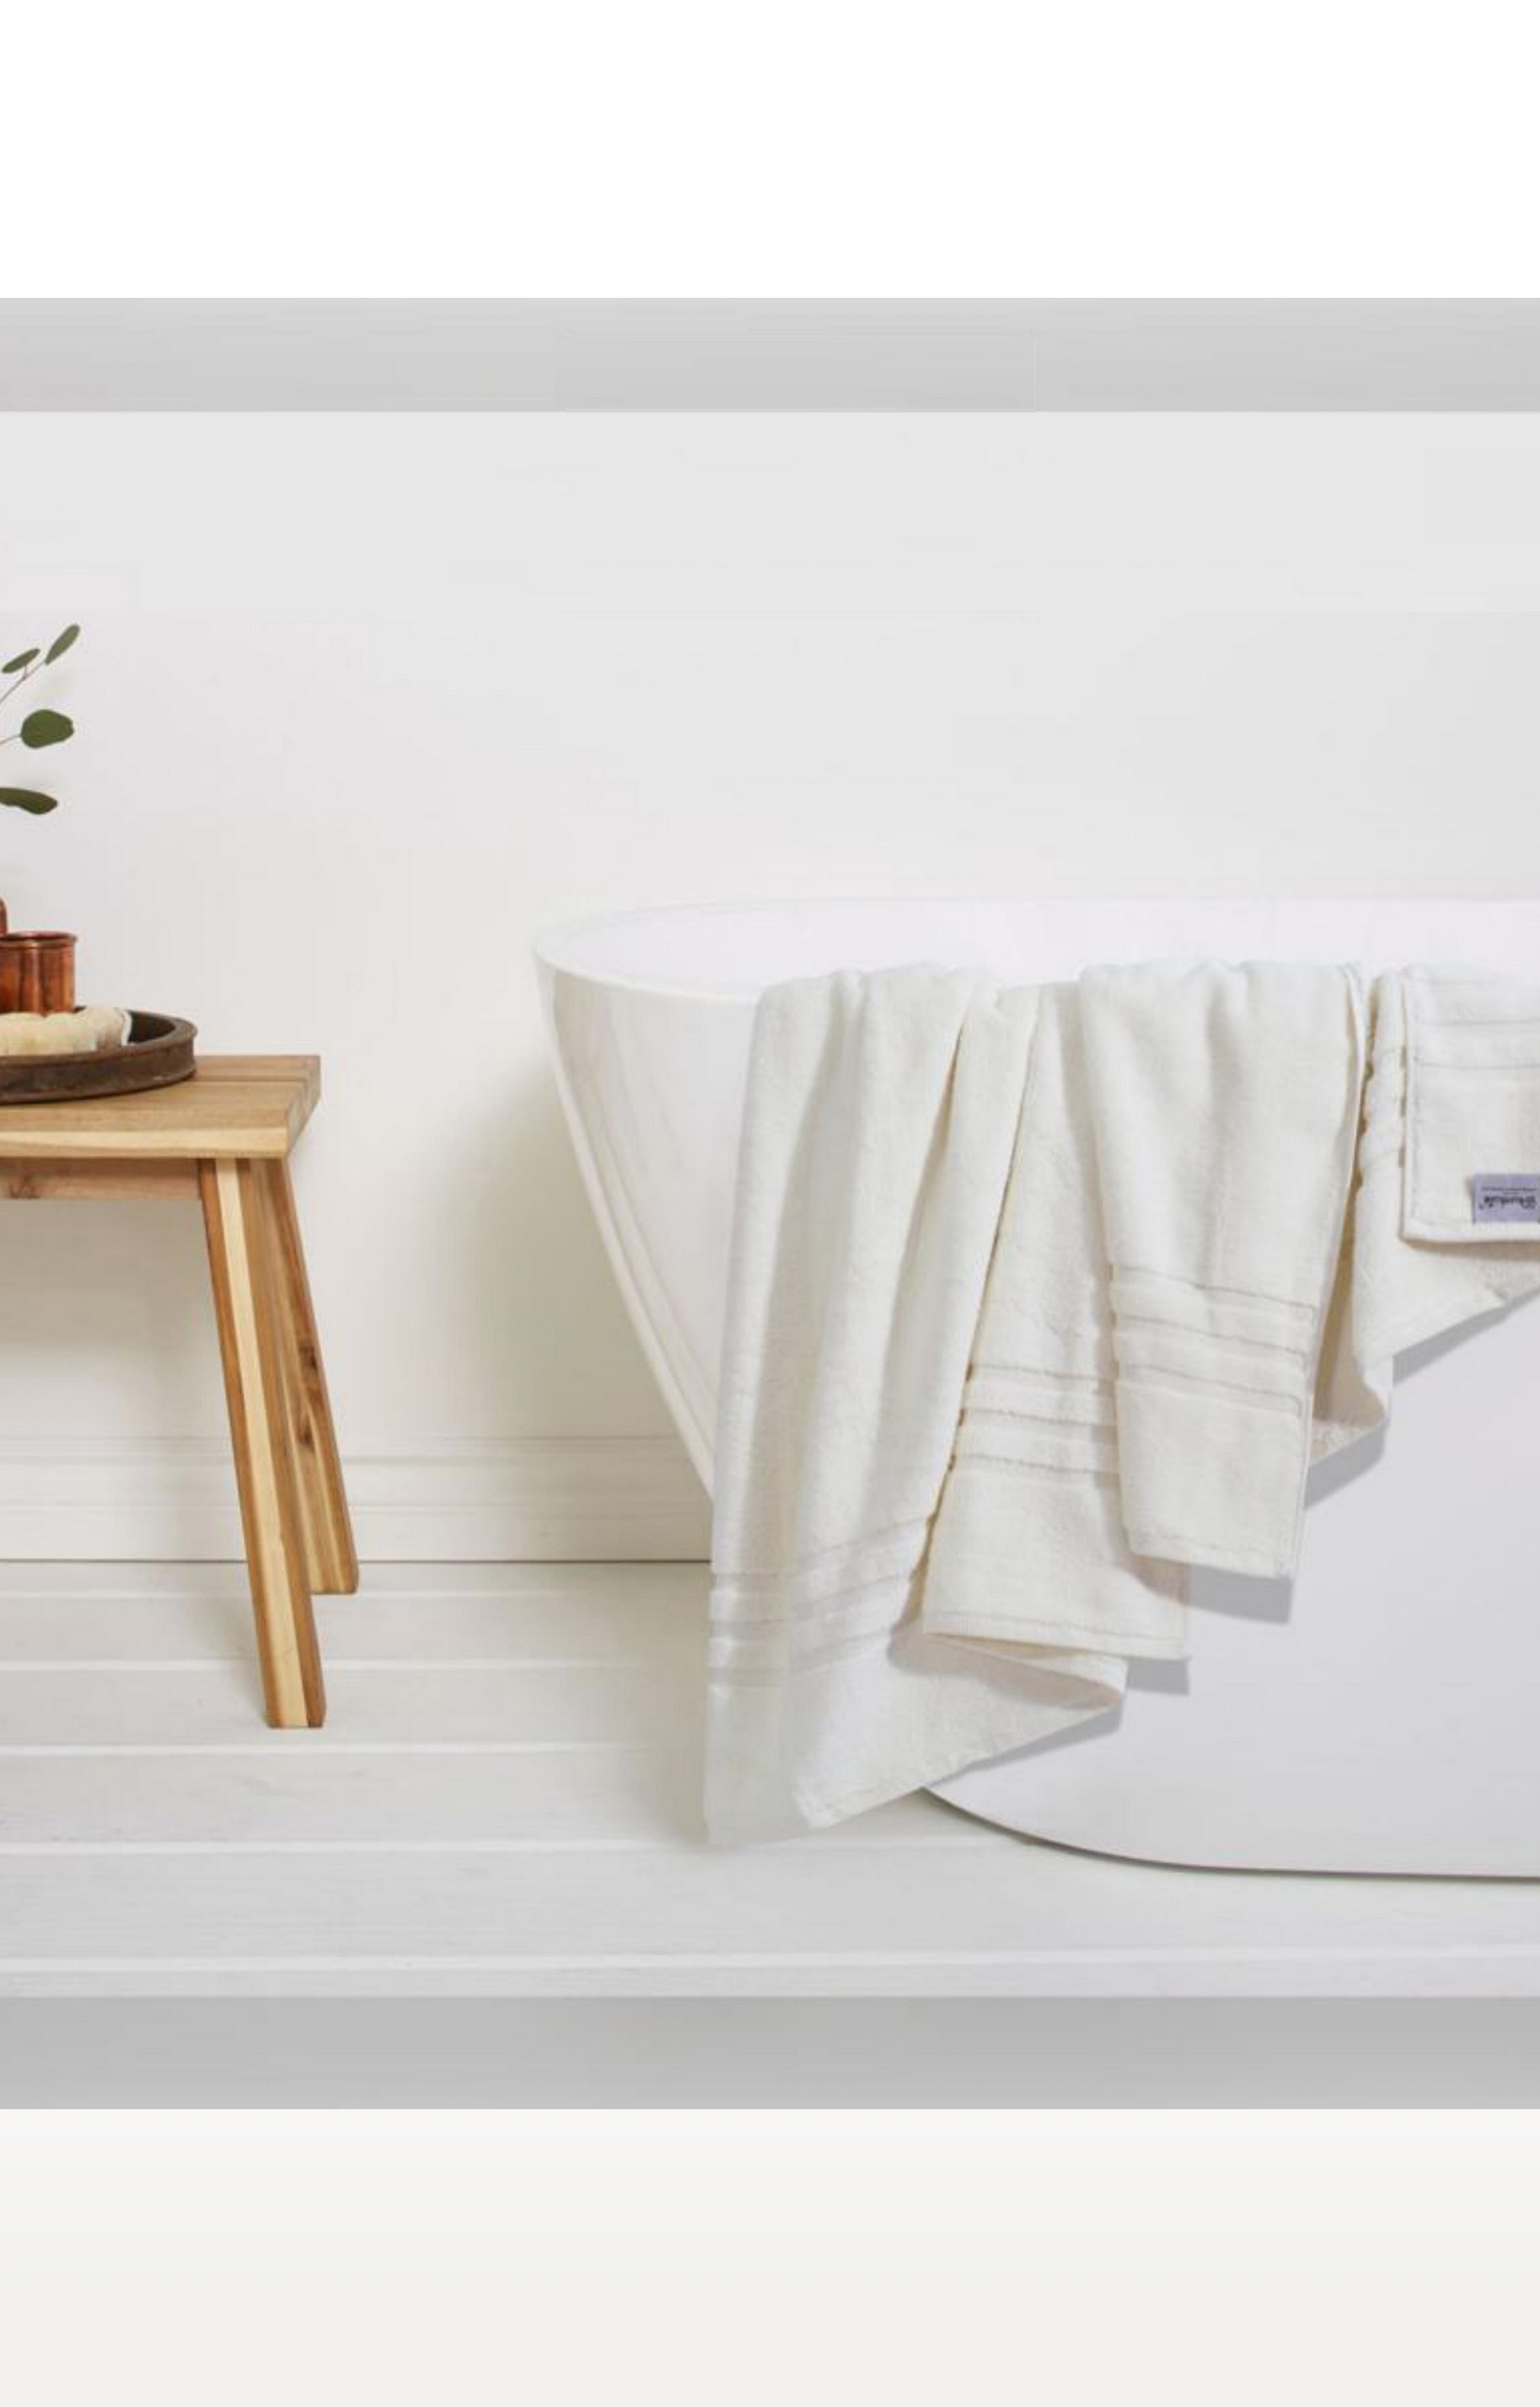 Sita Fabrics | Sita Fabrics Premium Cotton Super Soft Zero Twist Yarn Very Airy 600 GSM Bath Towel - Off White - (24x48 Inch)